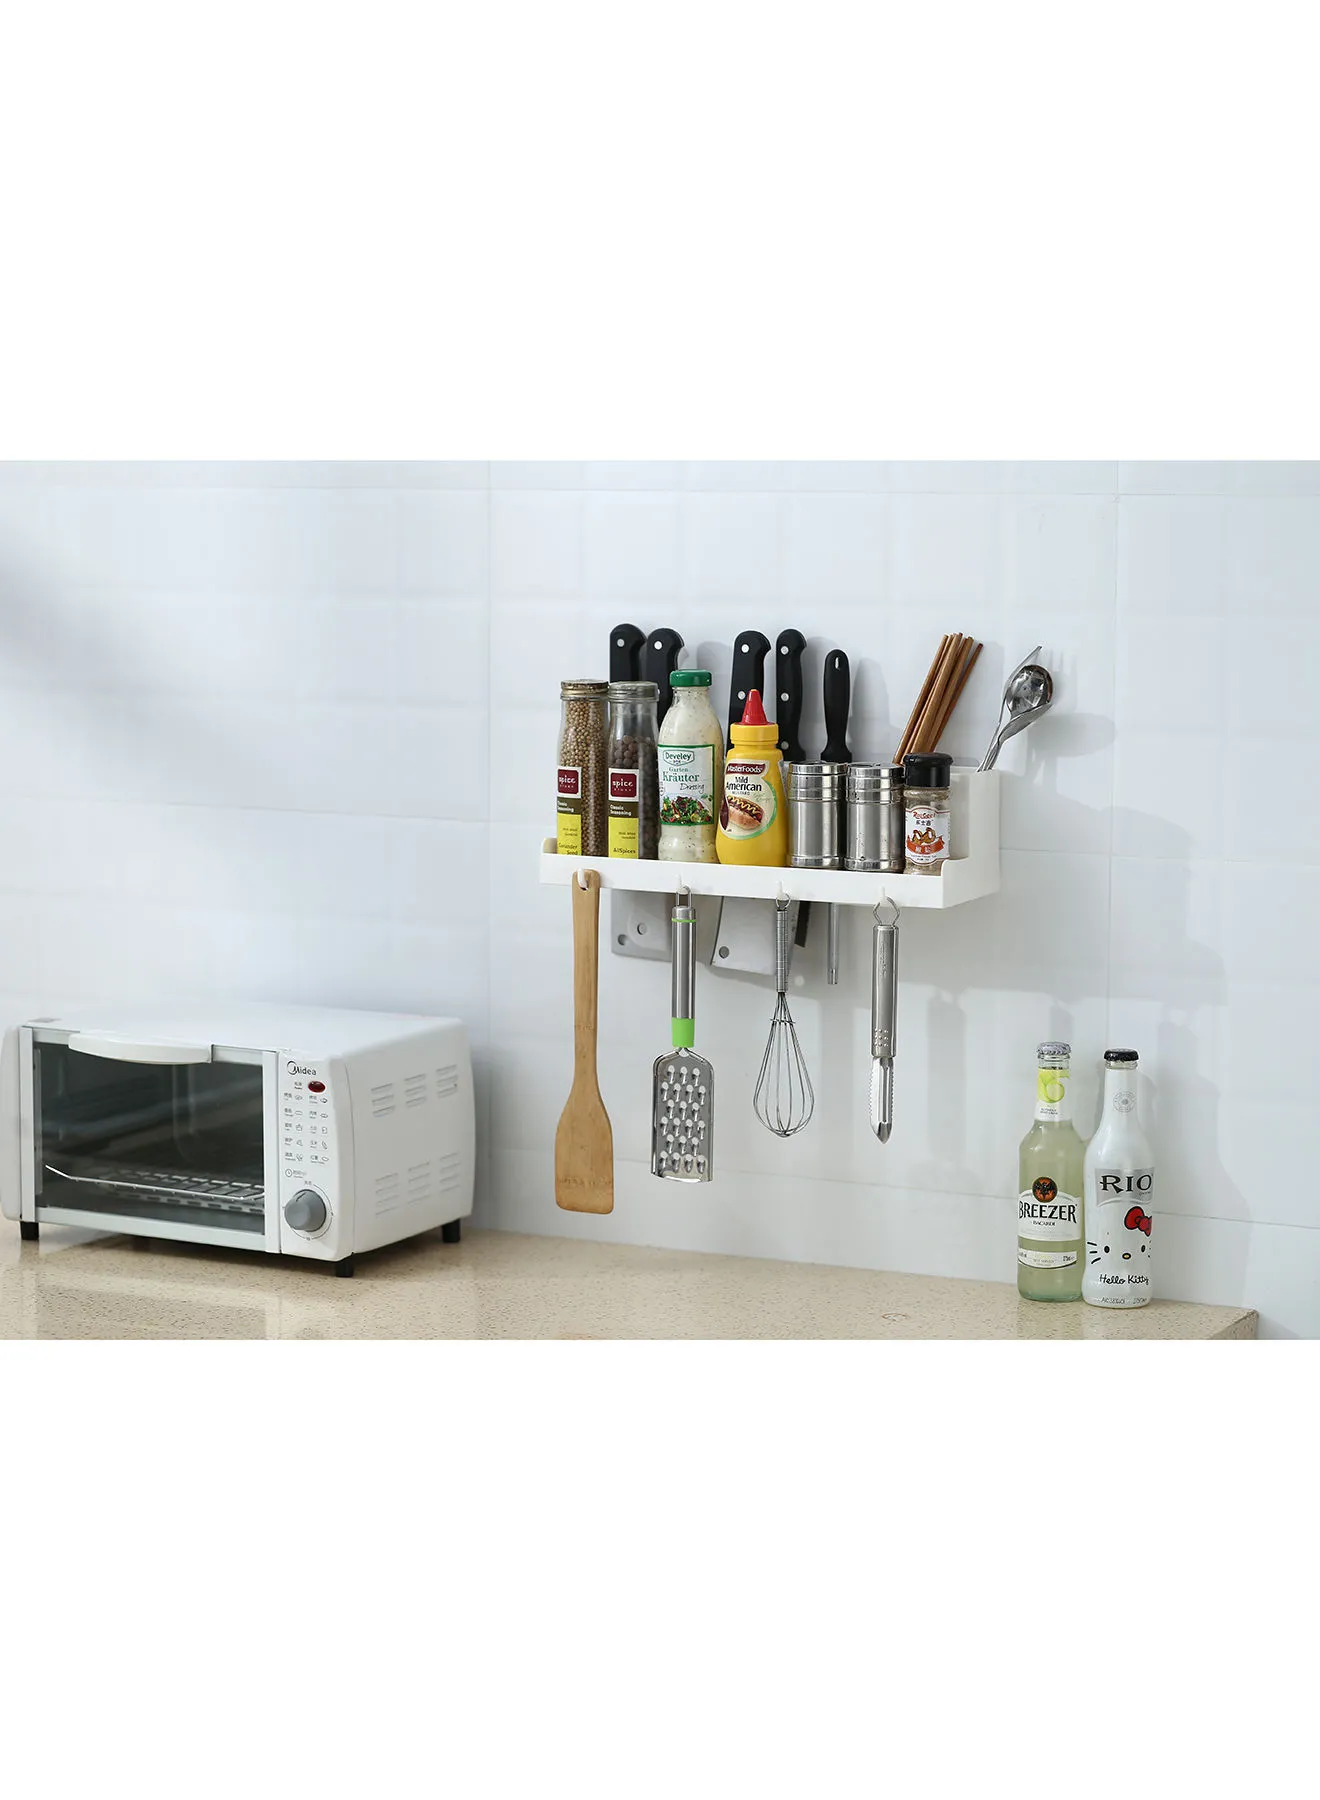 Amal Spice Rack - Wall Mounted - Kitchen Organizer - Wall Shelf - Kitchen Storage - Shelves - White White Spice Rack